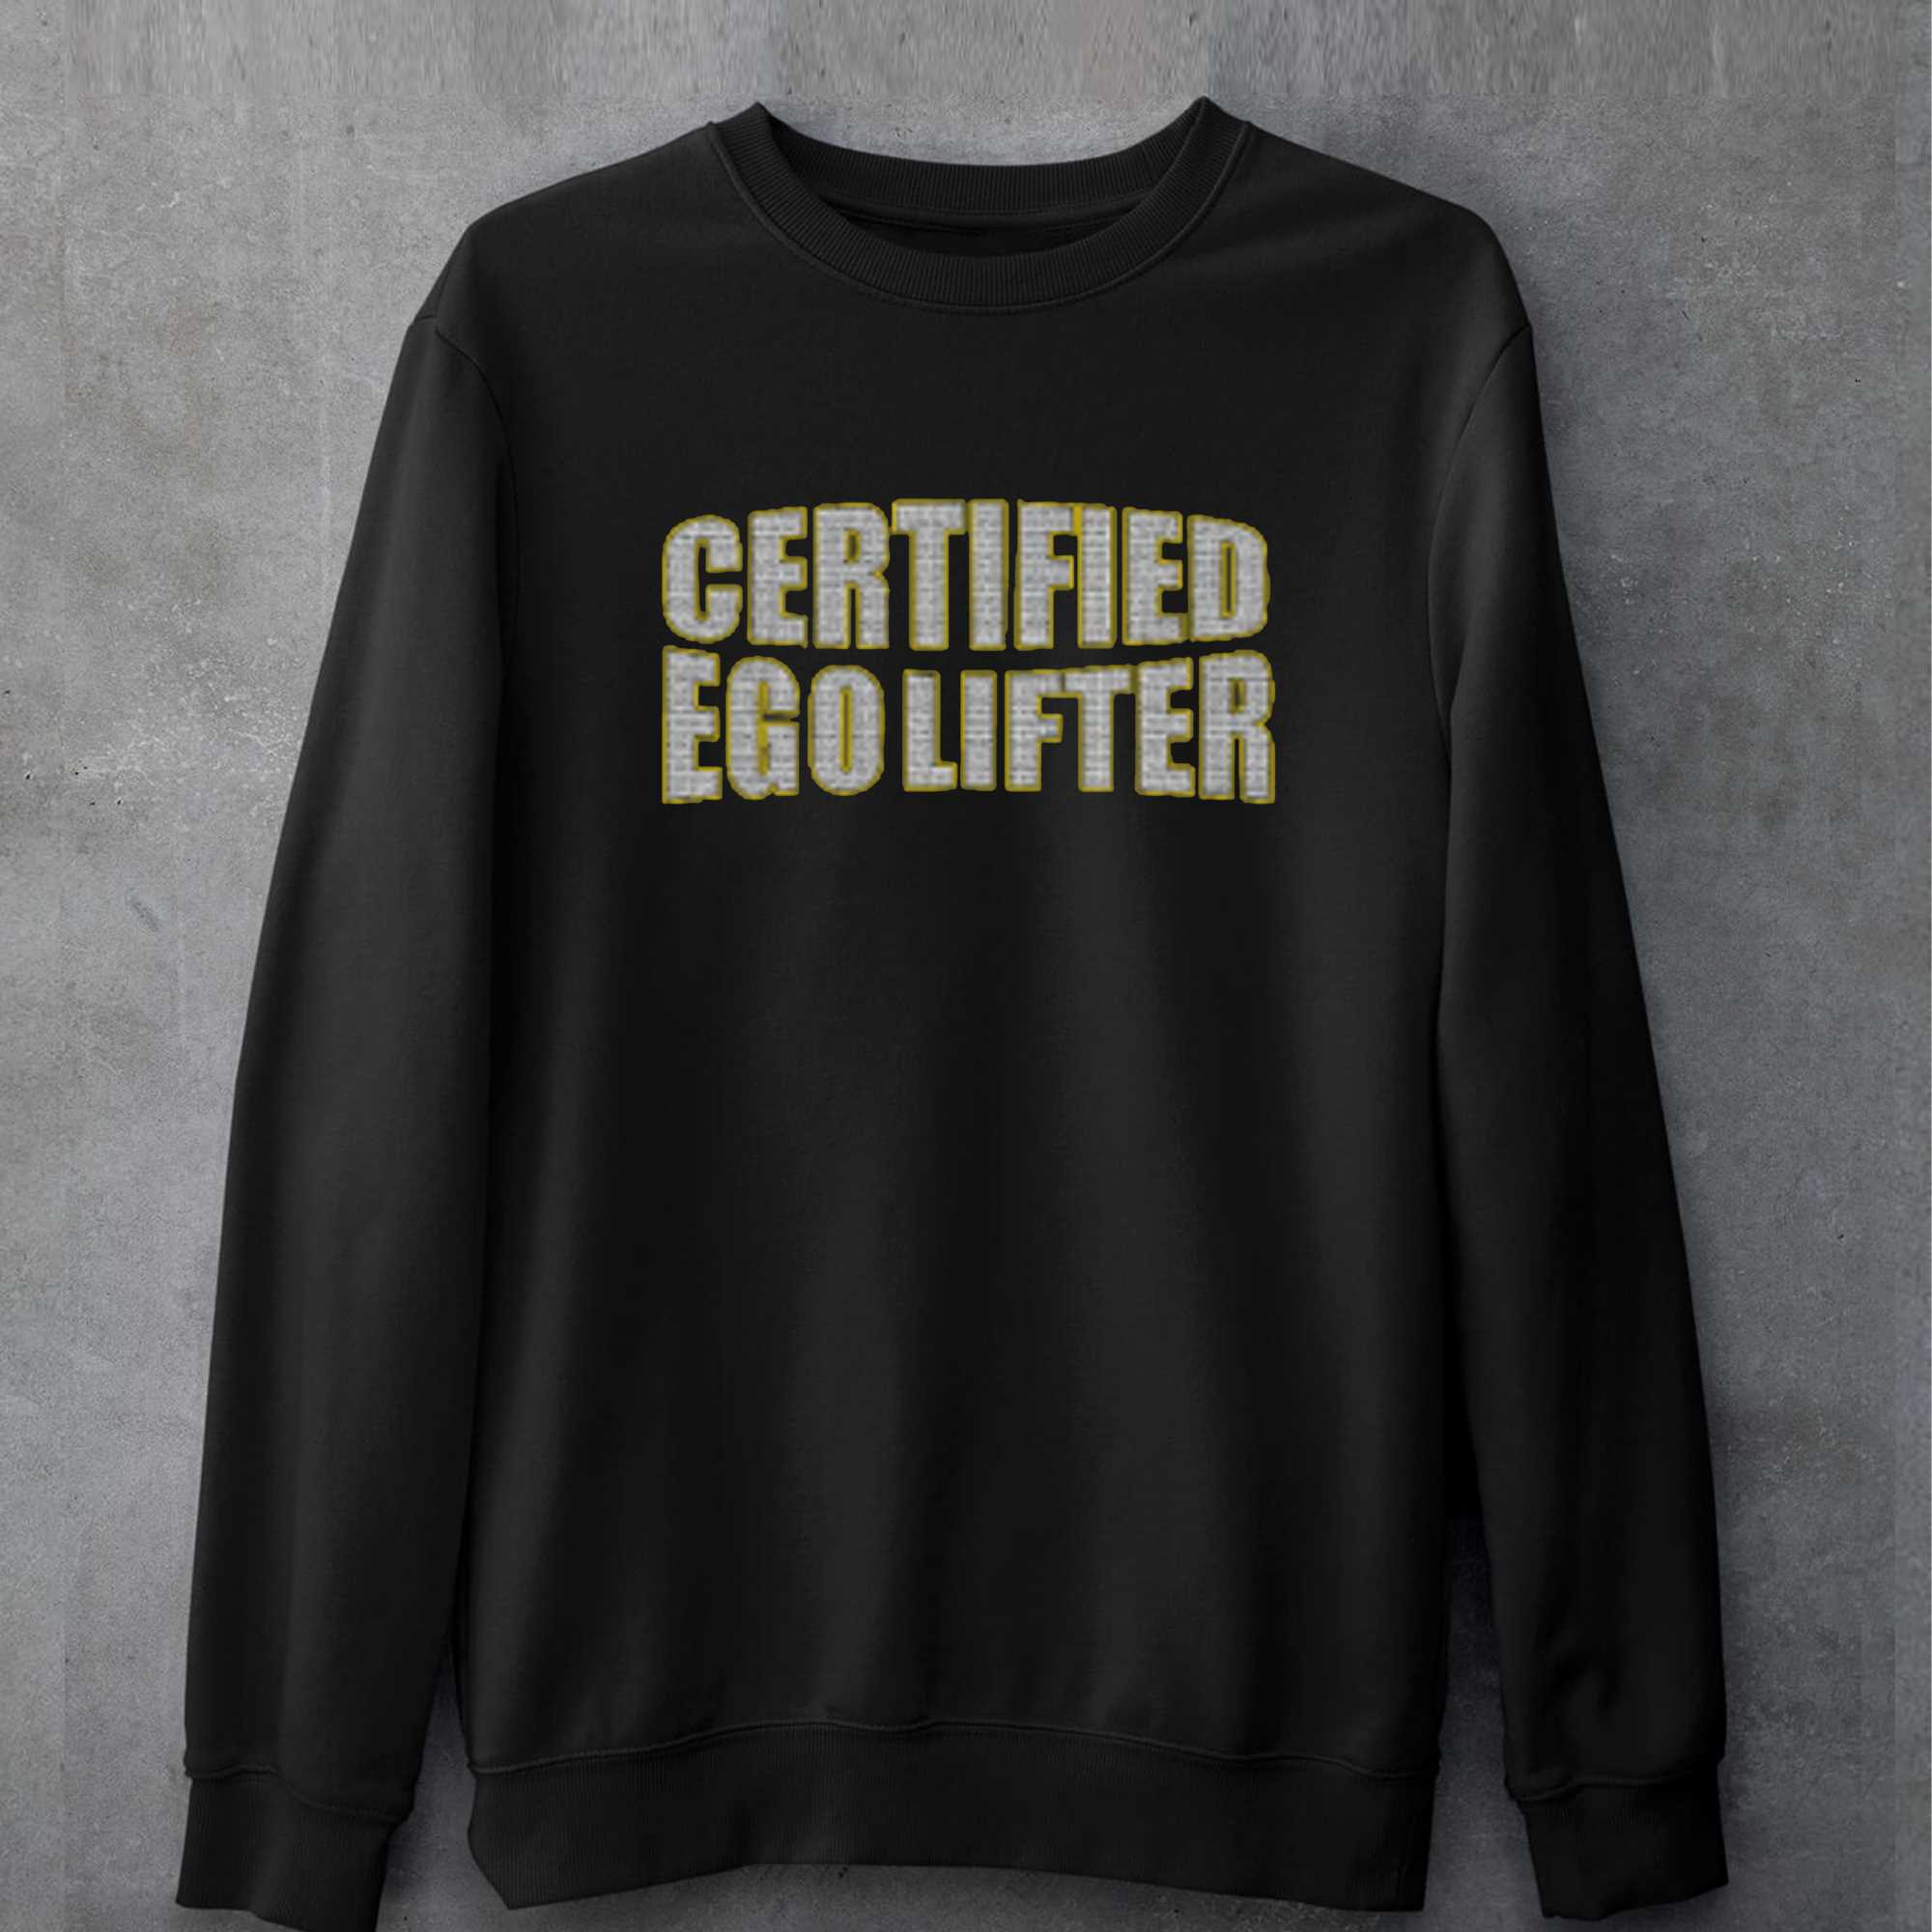 Certified Ego Lifter T-shirt 